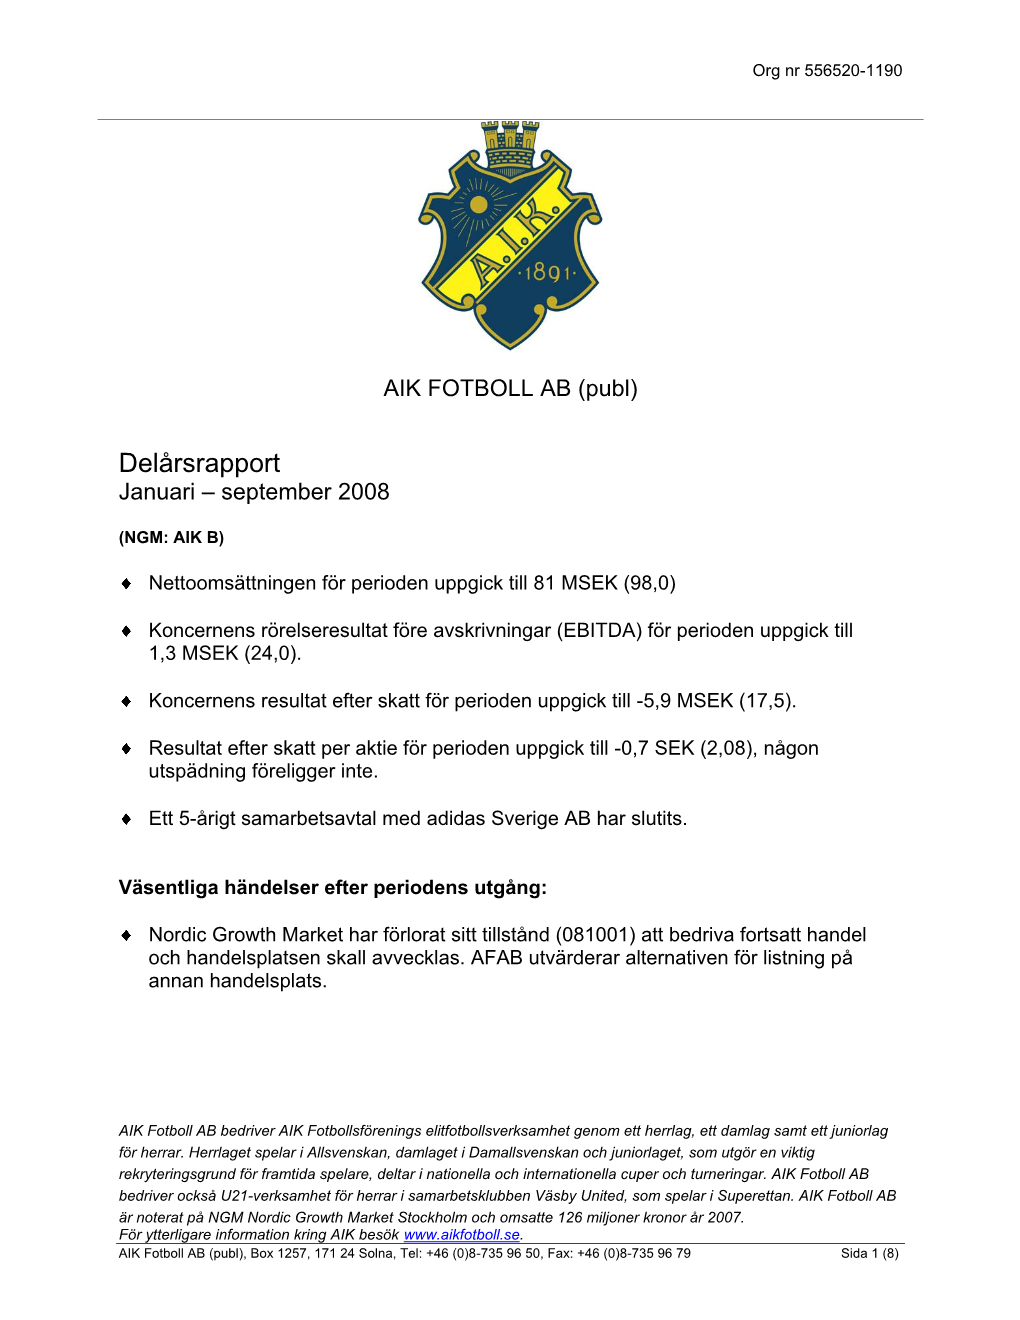 Delårsrapport Januari – September 2008